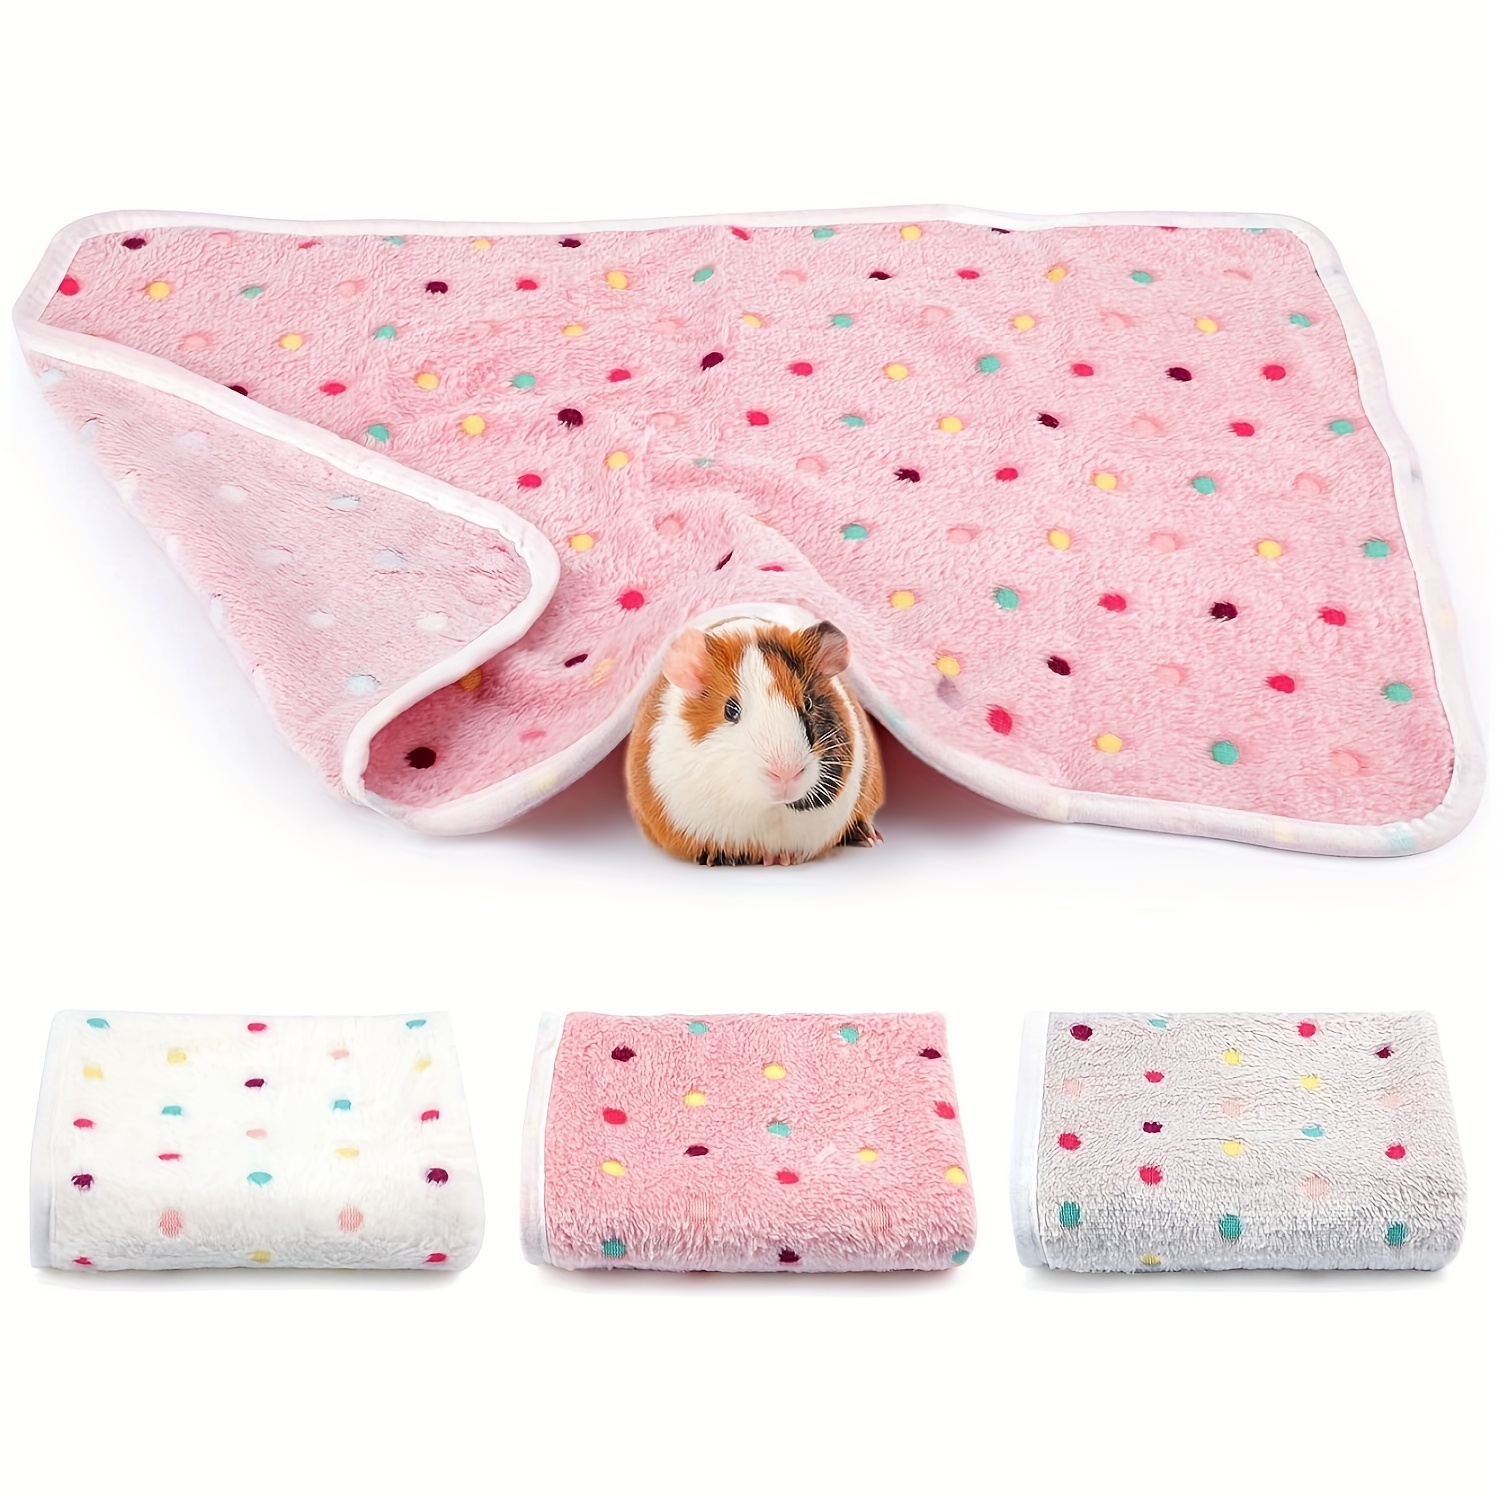 

3 Packs Of Big Hamster Blankets, Small Pet Animal Soft Warm Fleece Blankets Sleep Mat Pad Cover Flannel Throw For Hamster Rabbit Dog Cat Chinchilla Hedgehog